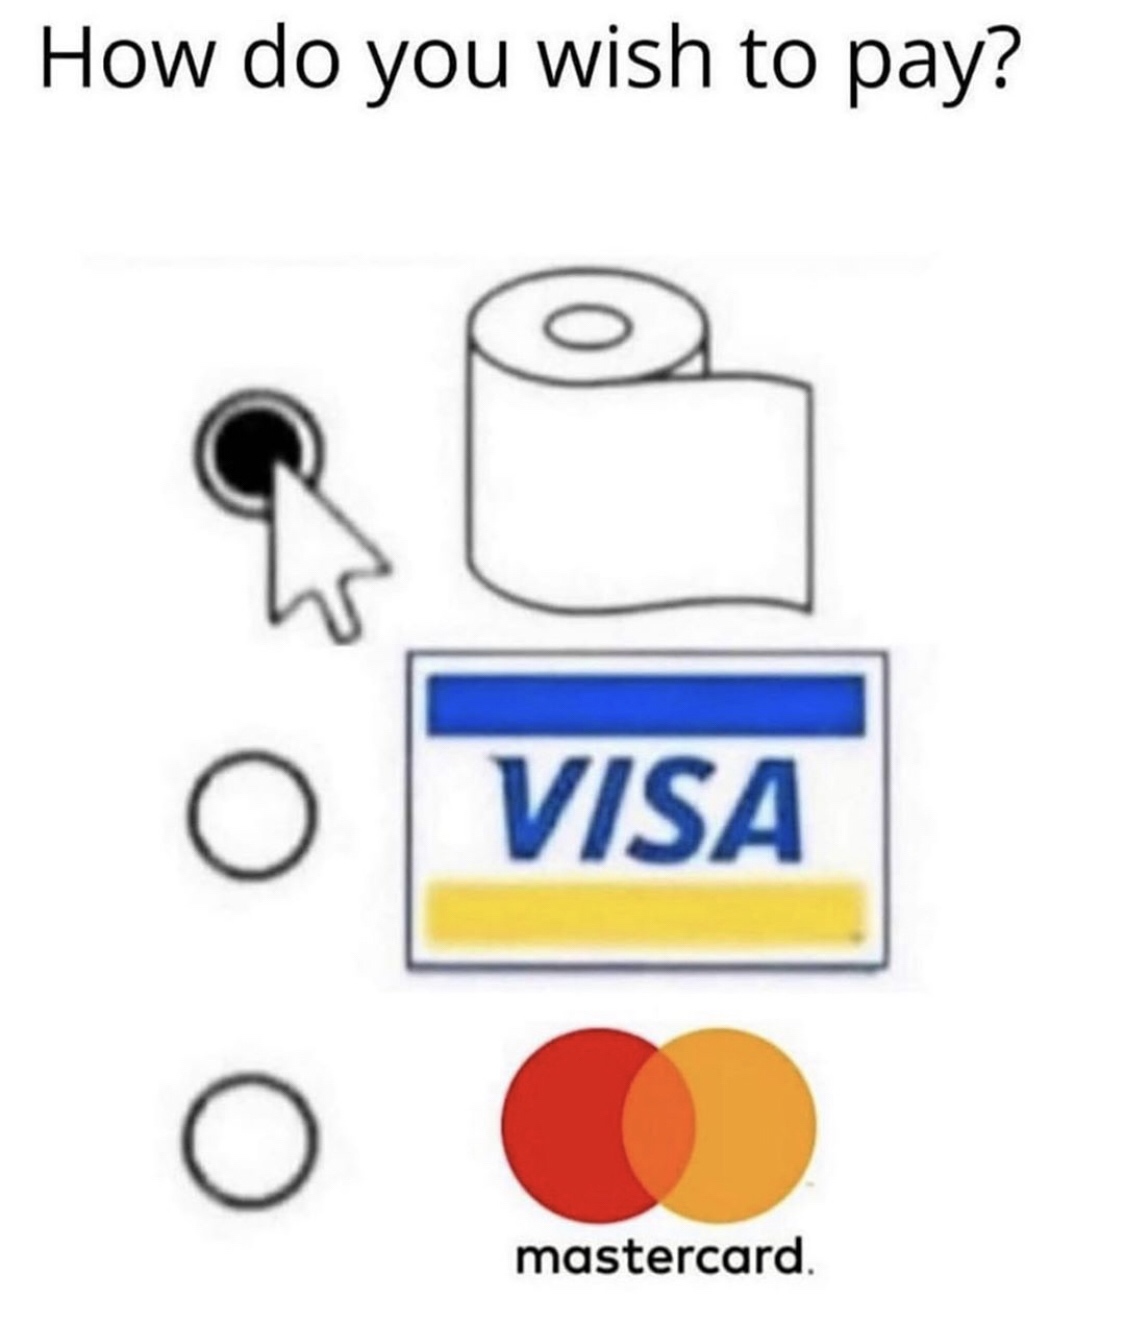 memes coronavirus - How do you wish to pay? Visa mastercard.